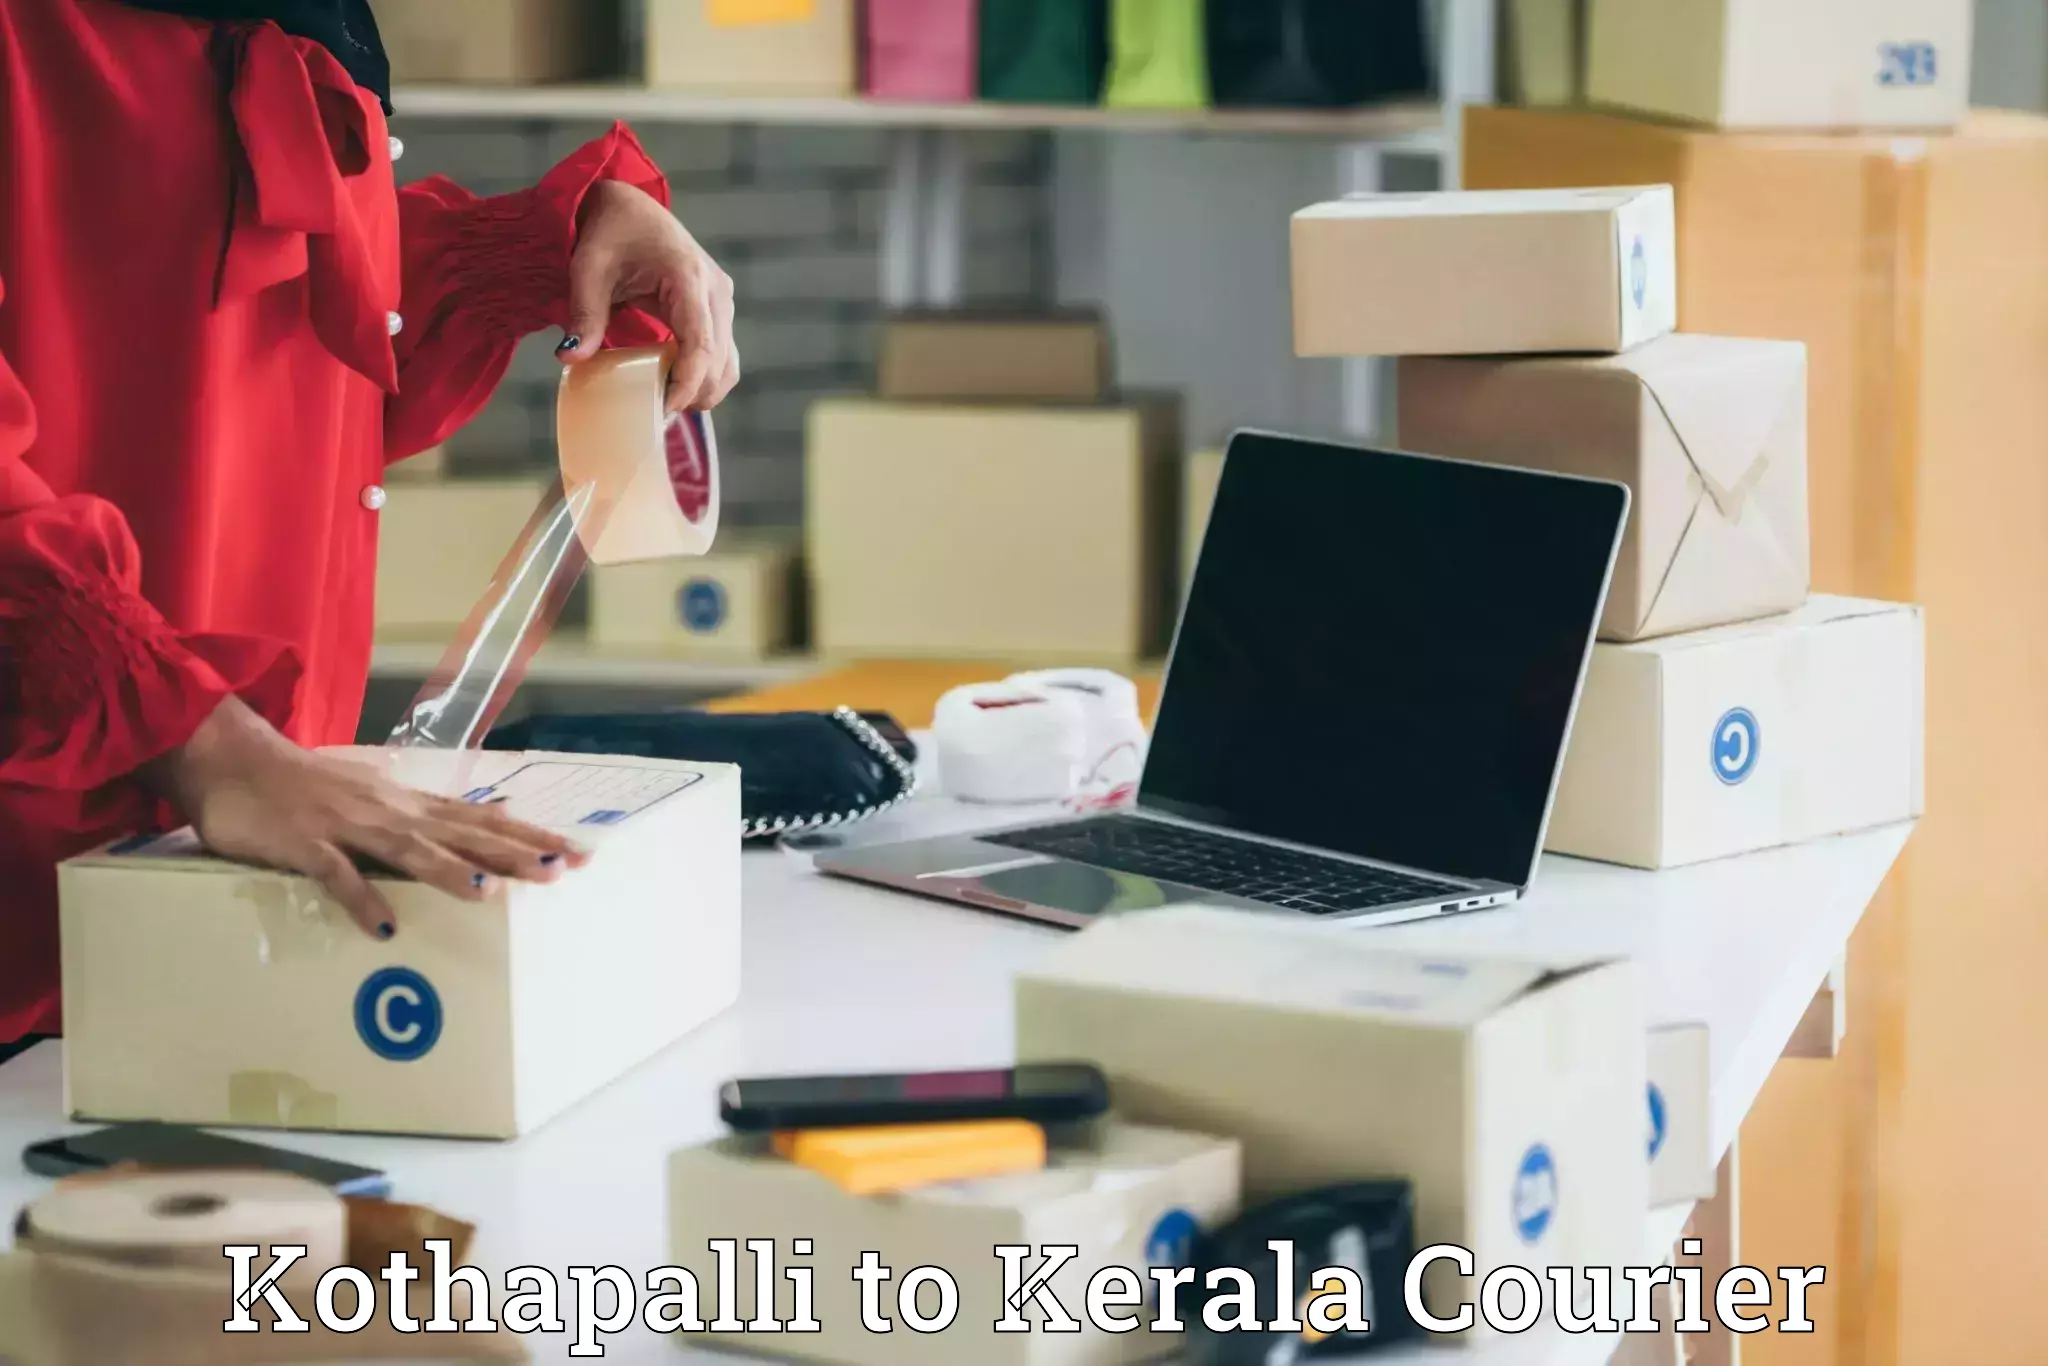 Bulk courier orders in Kothapalli to Cochin Port Kochi